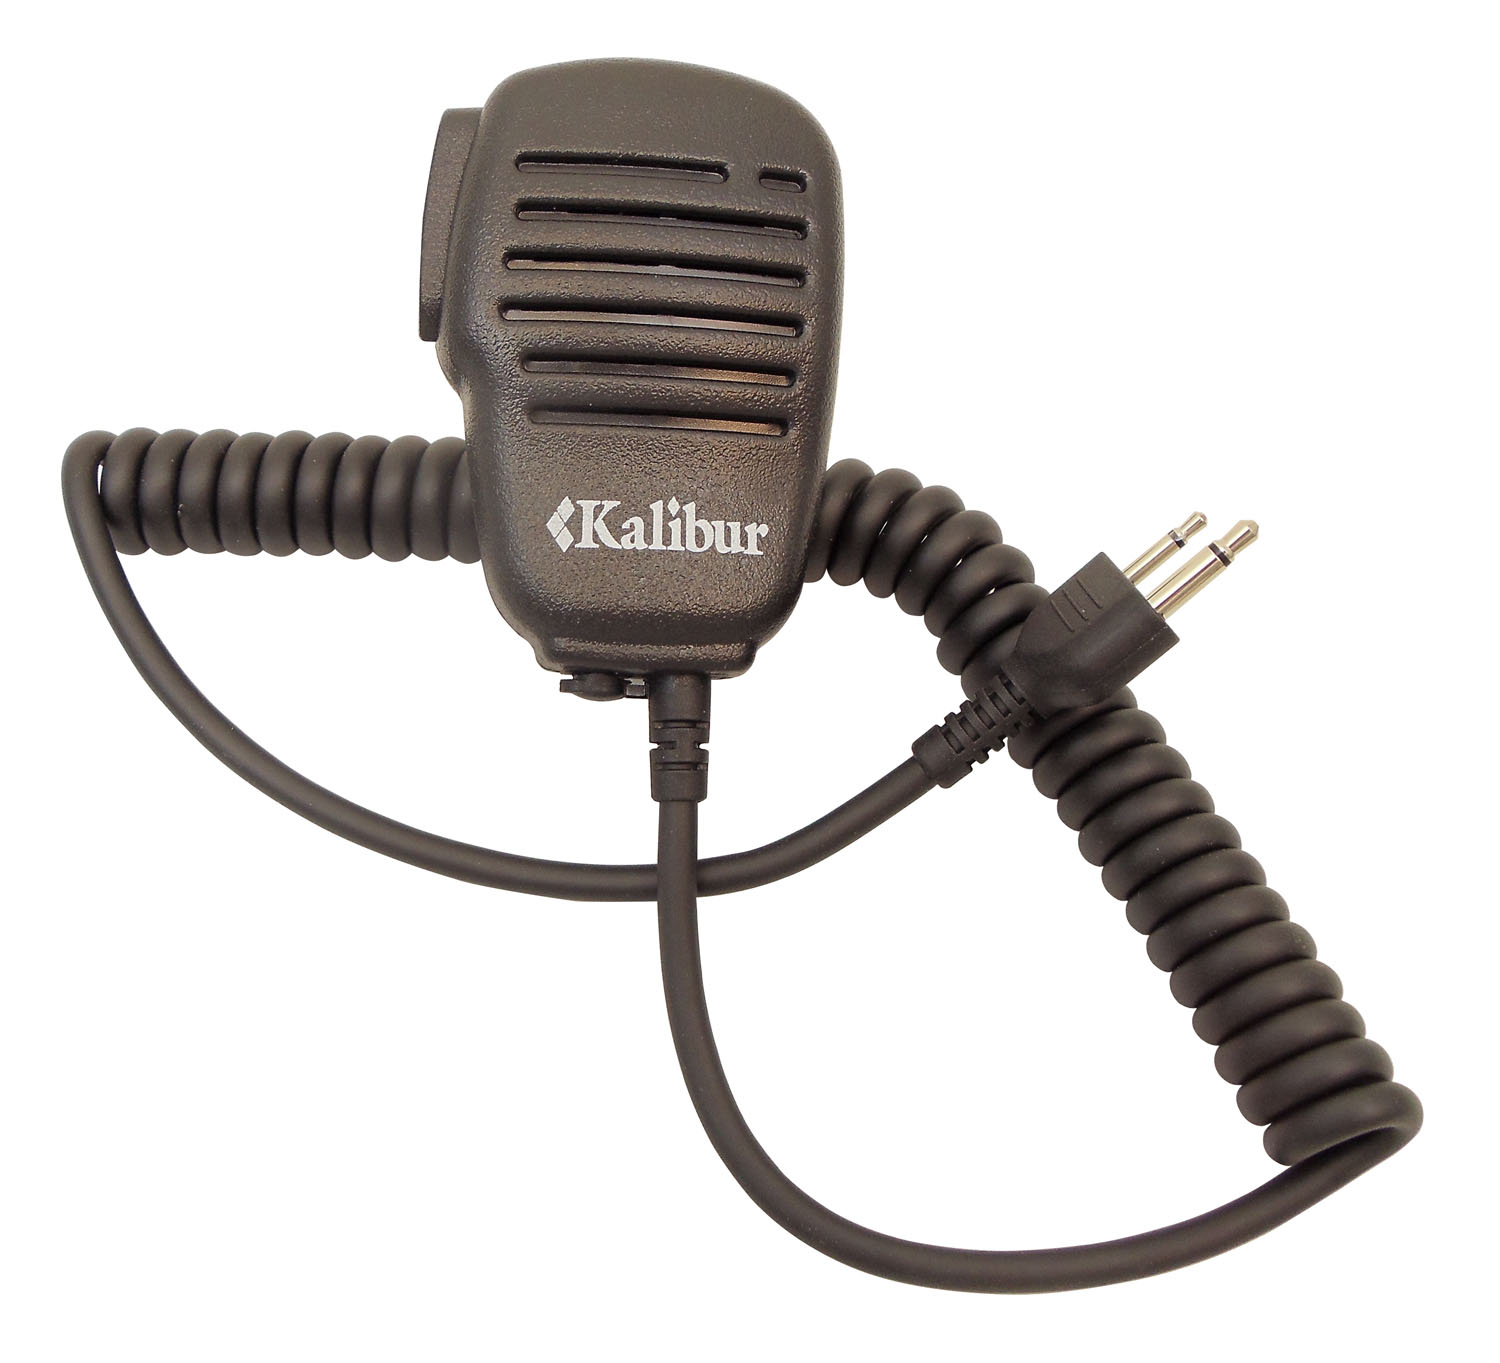 Kalibur - Durable Speaker Microphone With Spring Loaded Clip & Earphone/Earbud Jack For Cobra & Midland Handheld Cb Radios